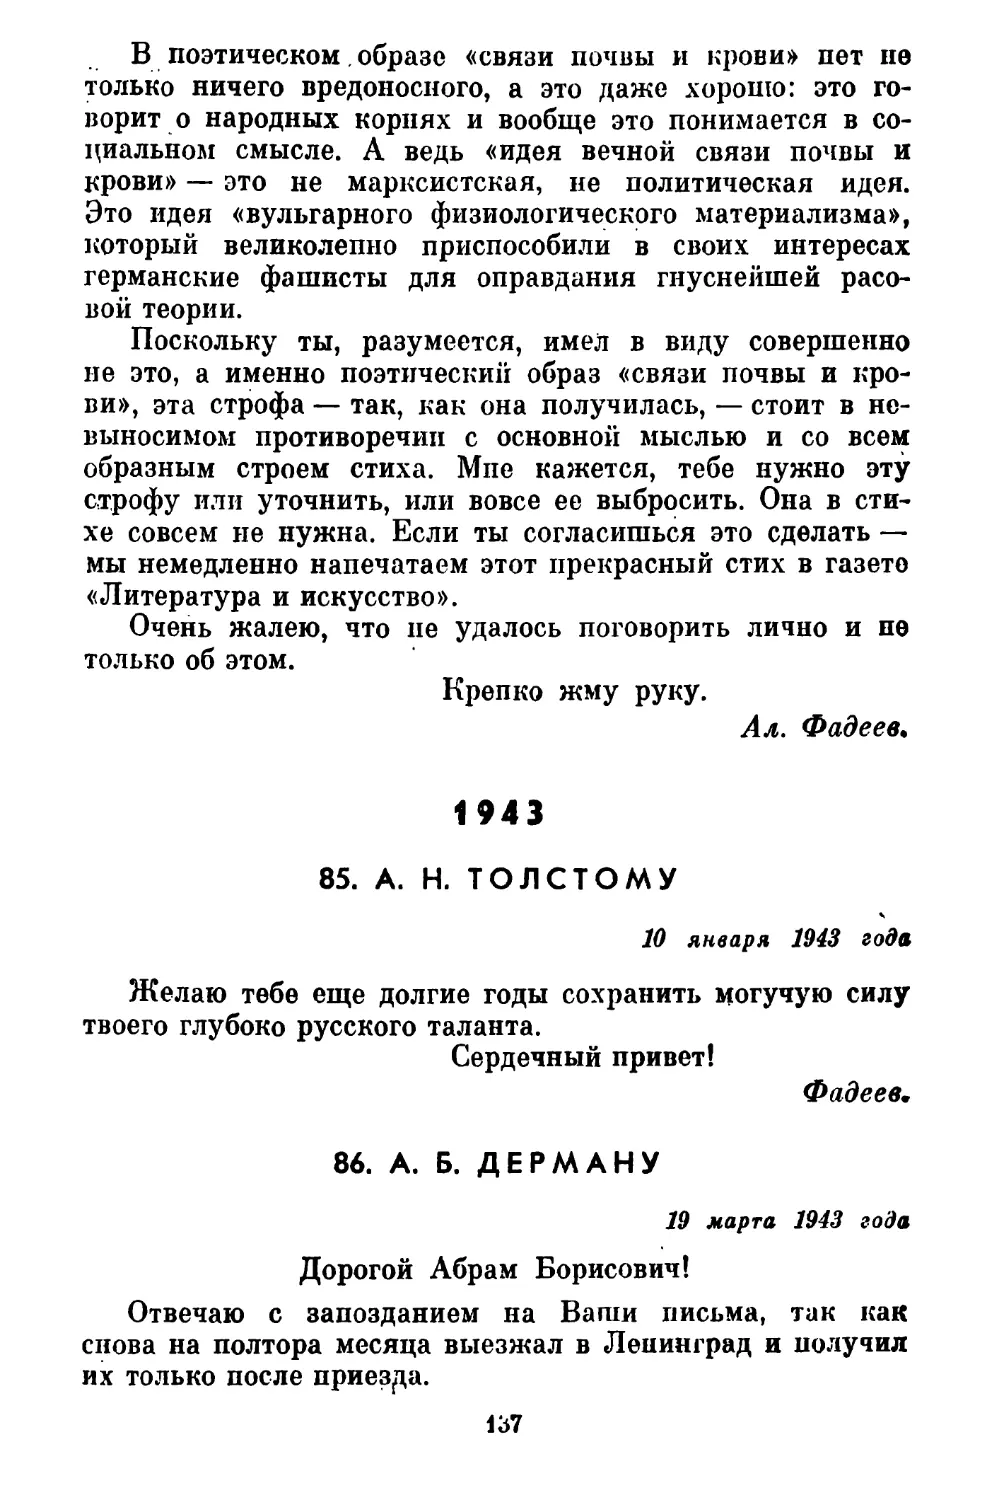 1943
86. А. Б. ДЕРМАНУ